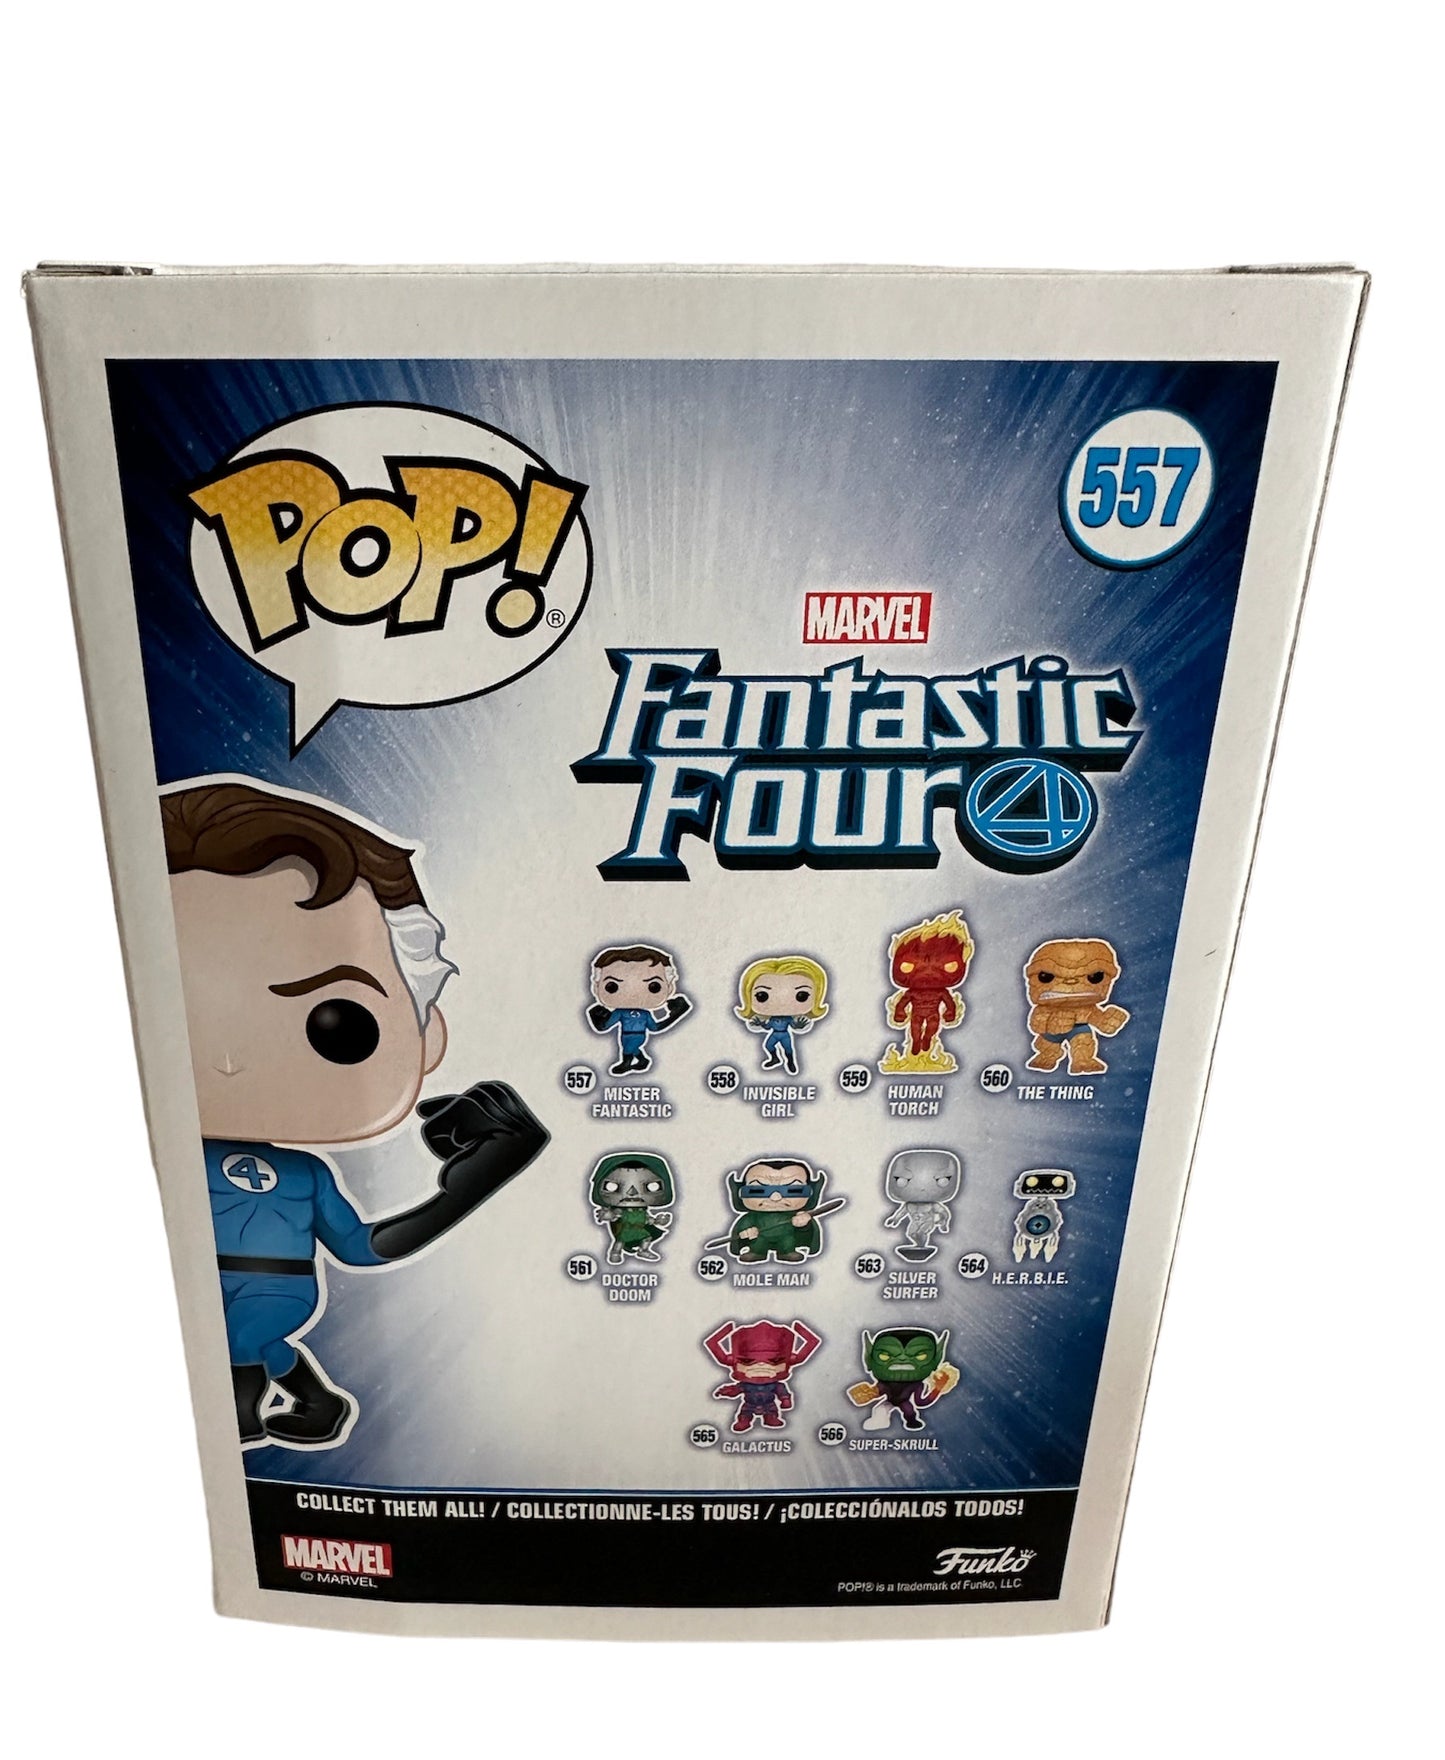 POP! 2019 Marvels The Fantastic Four Pop Vinyl Figure - Mister Fantastic Bobble-Head No. 557 - Brand New Shop Stock Room Find